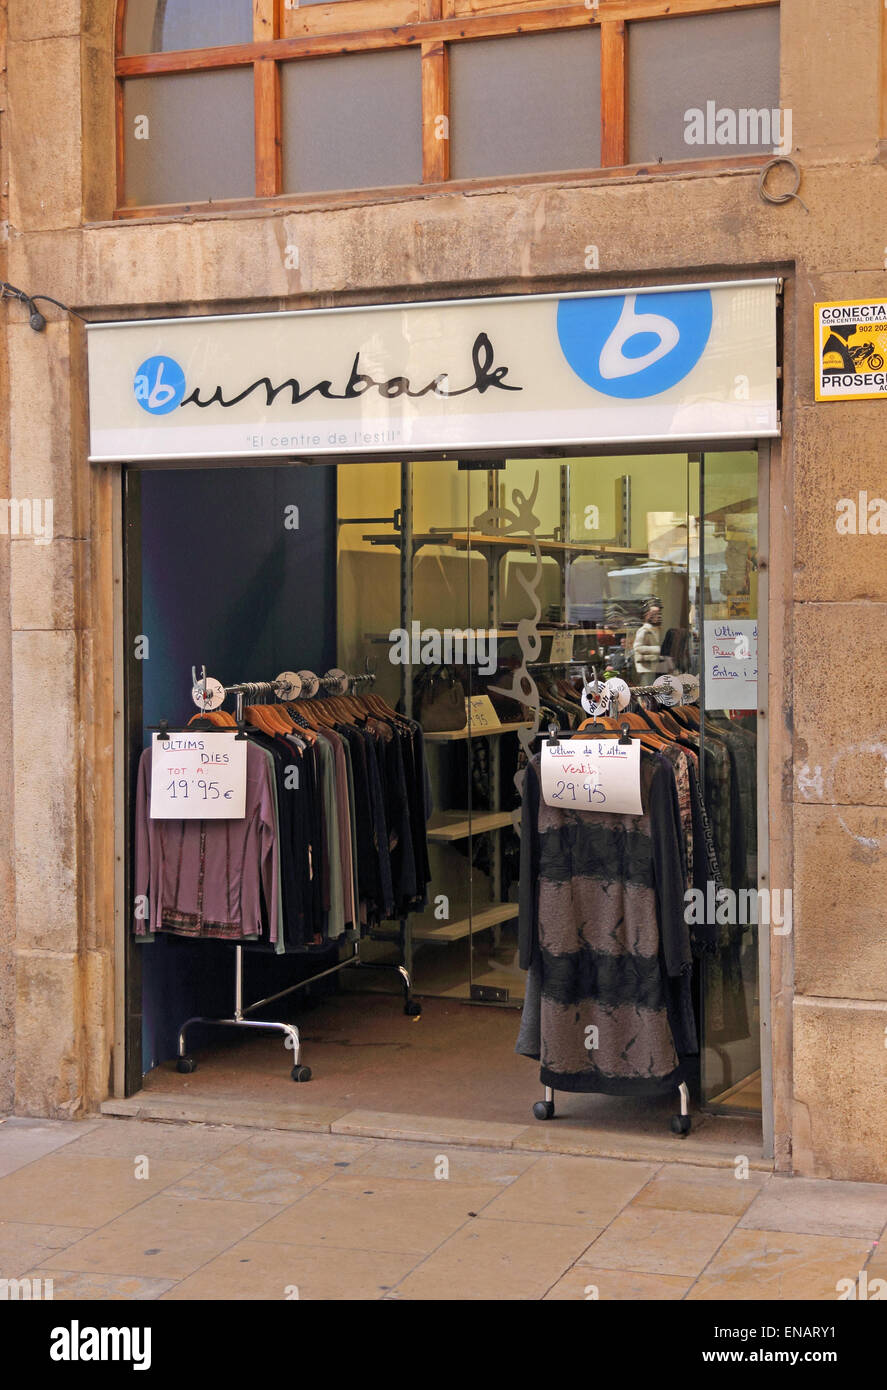 Bumback clothes shop, Montblanc, Catalonia, Spain Stock Photo